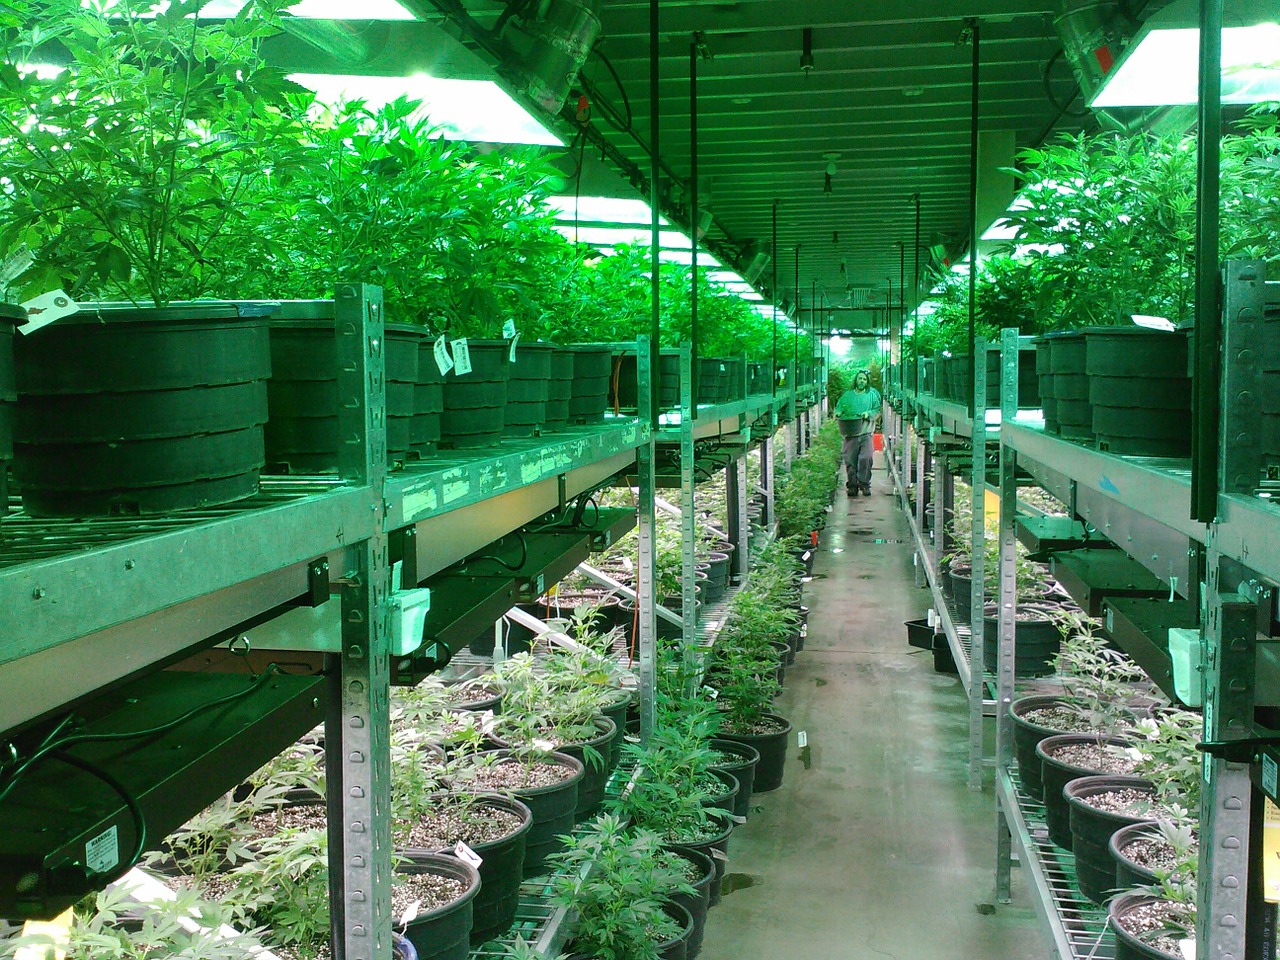 Cannabis POS Provider Green Bits Raises $2.2 Million